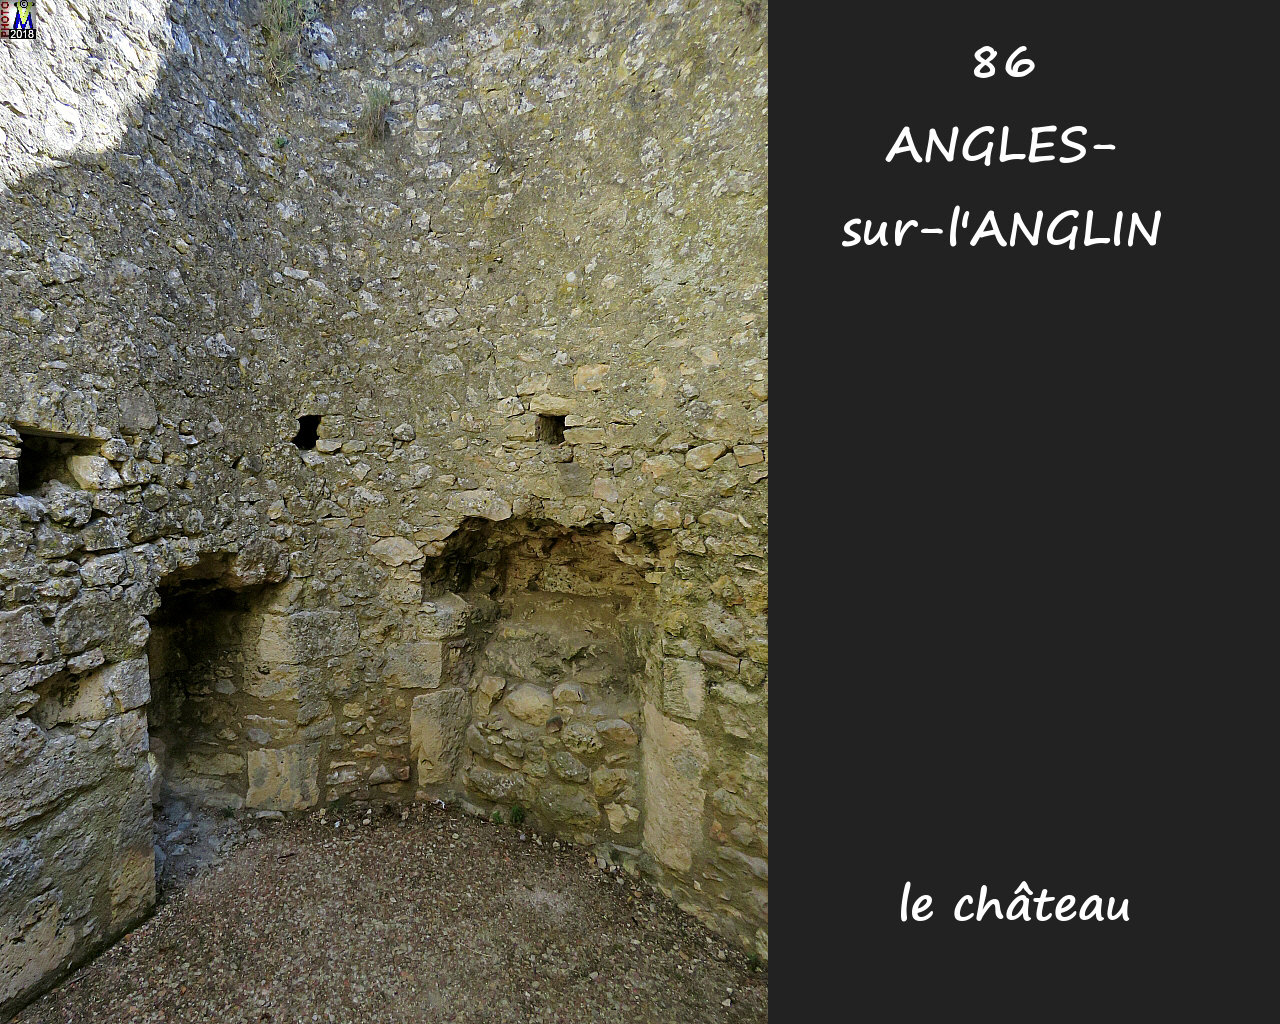 86ANGLES-S-ANGLIN_chateau_1134.jpg